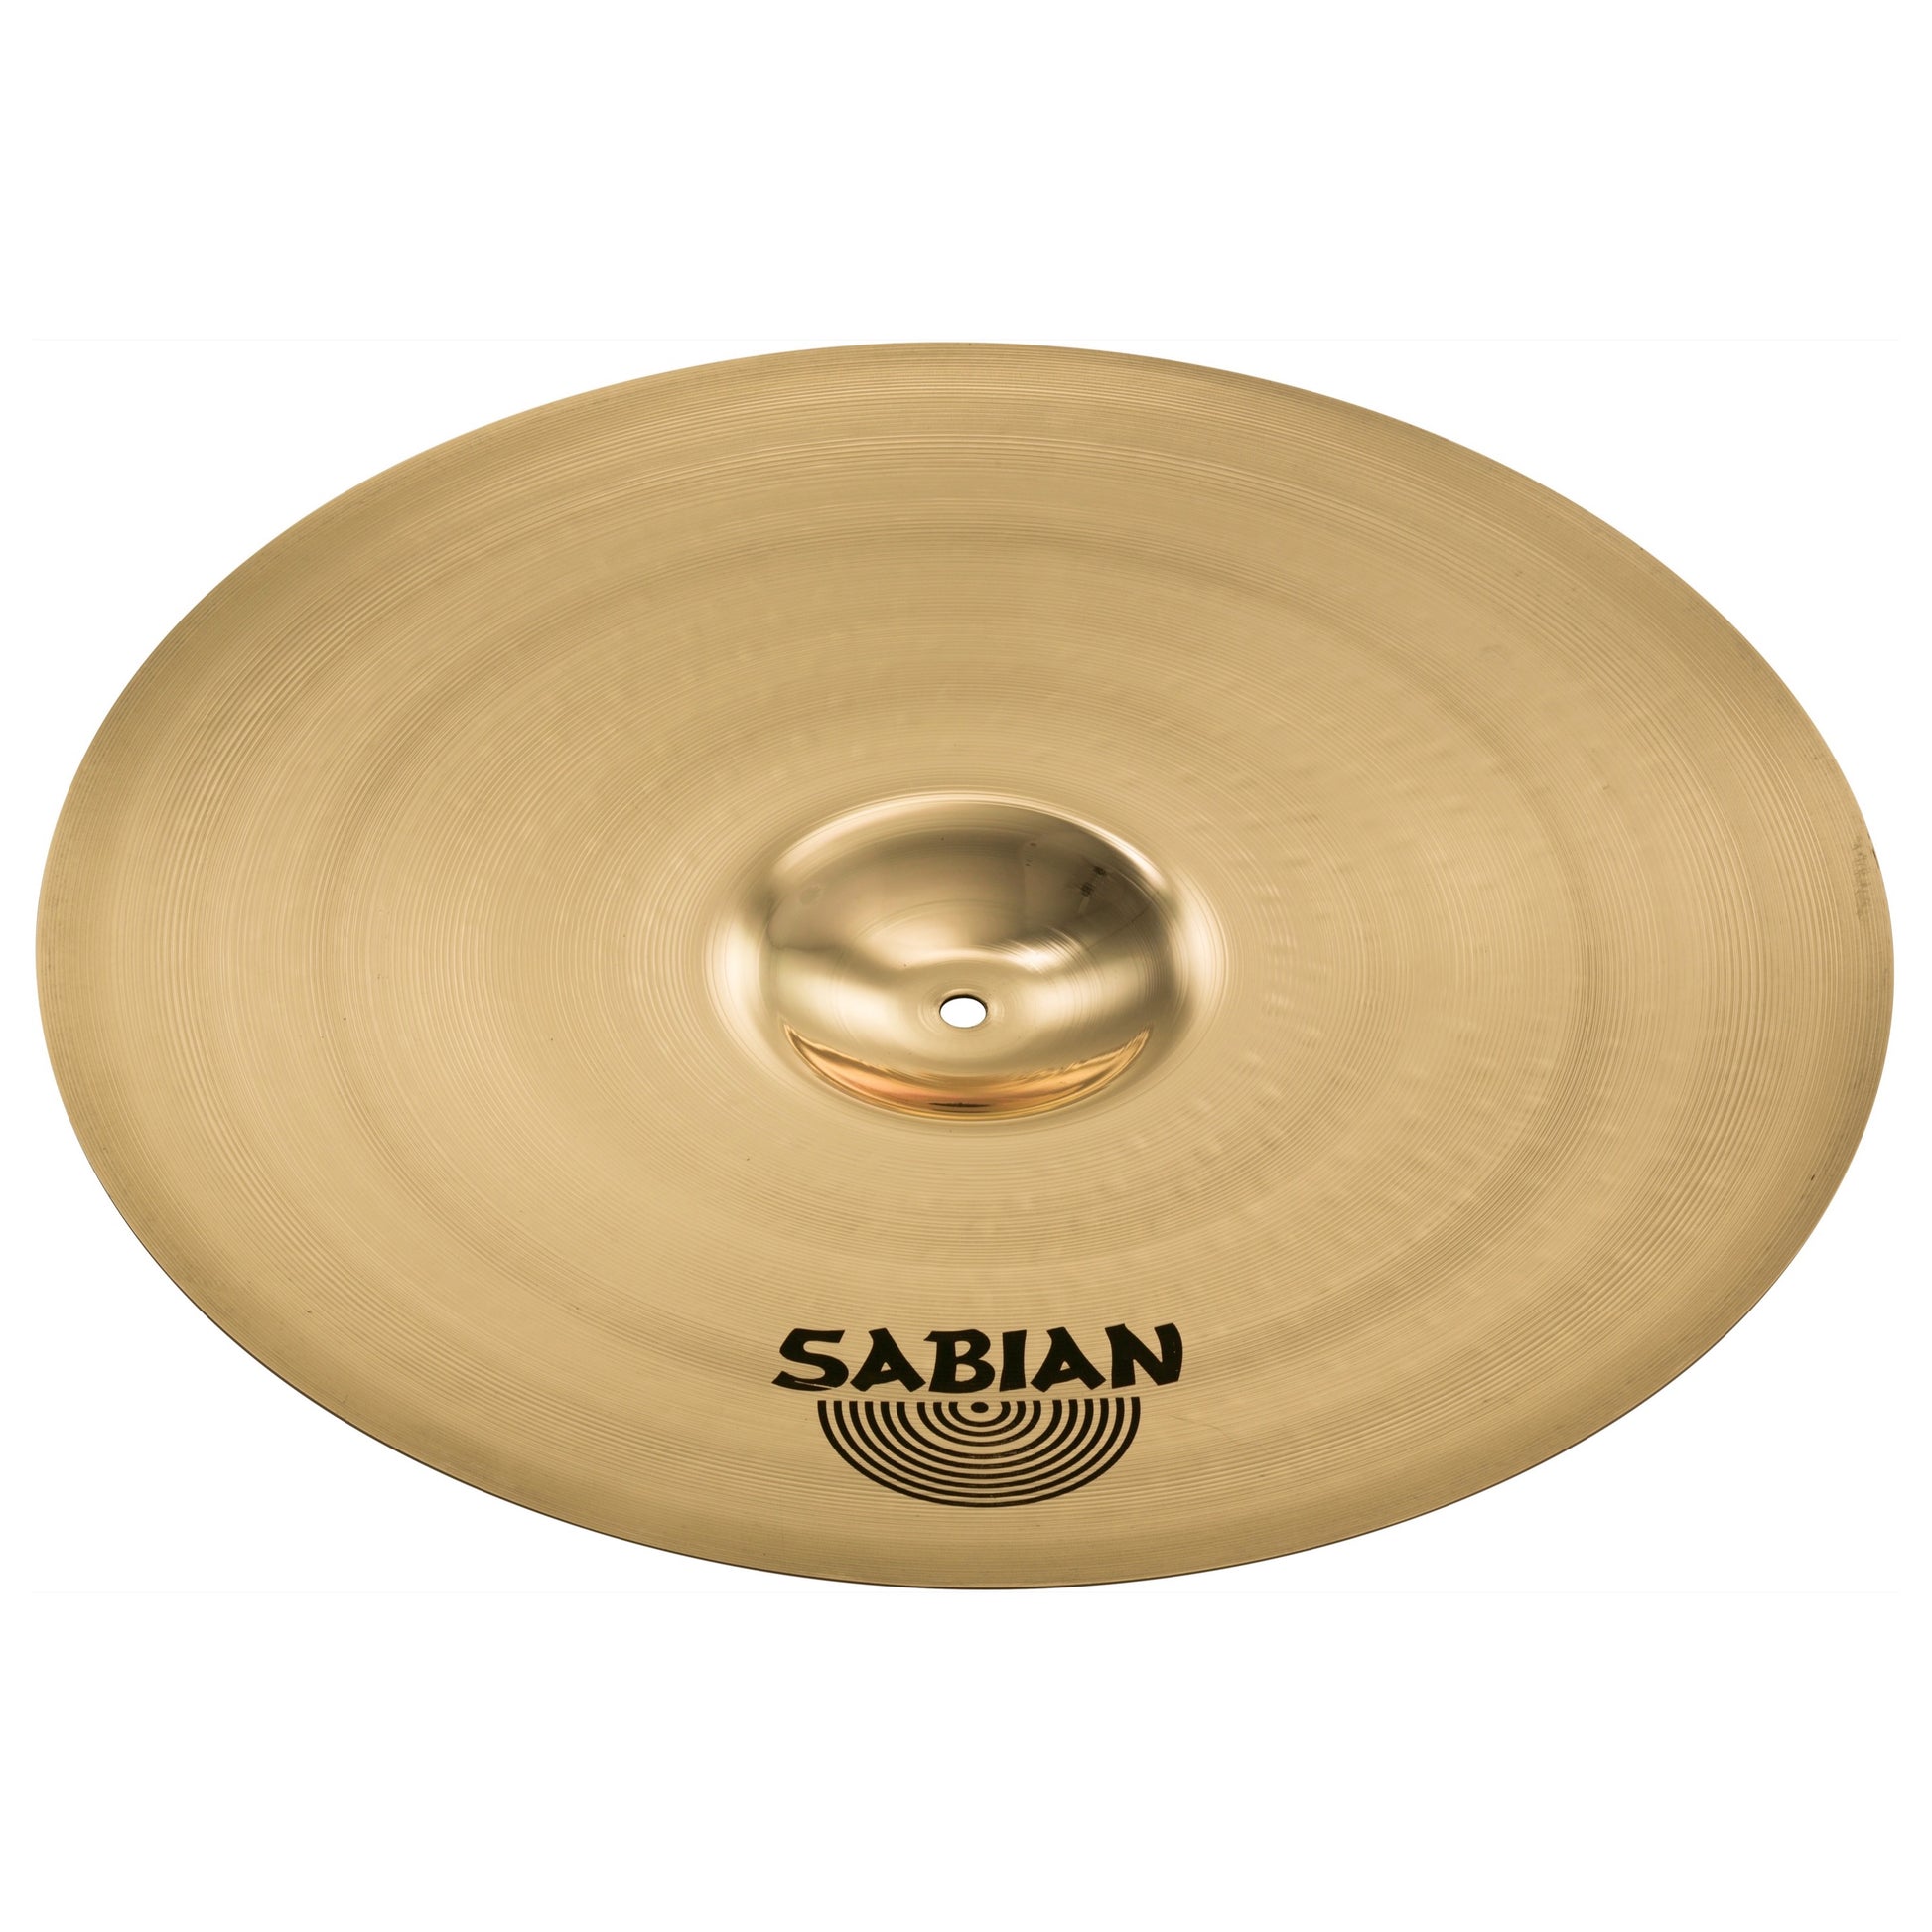 Sabian XSR Ride Cymbal, Brilliant Finish, 20 Inch